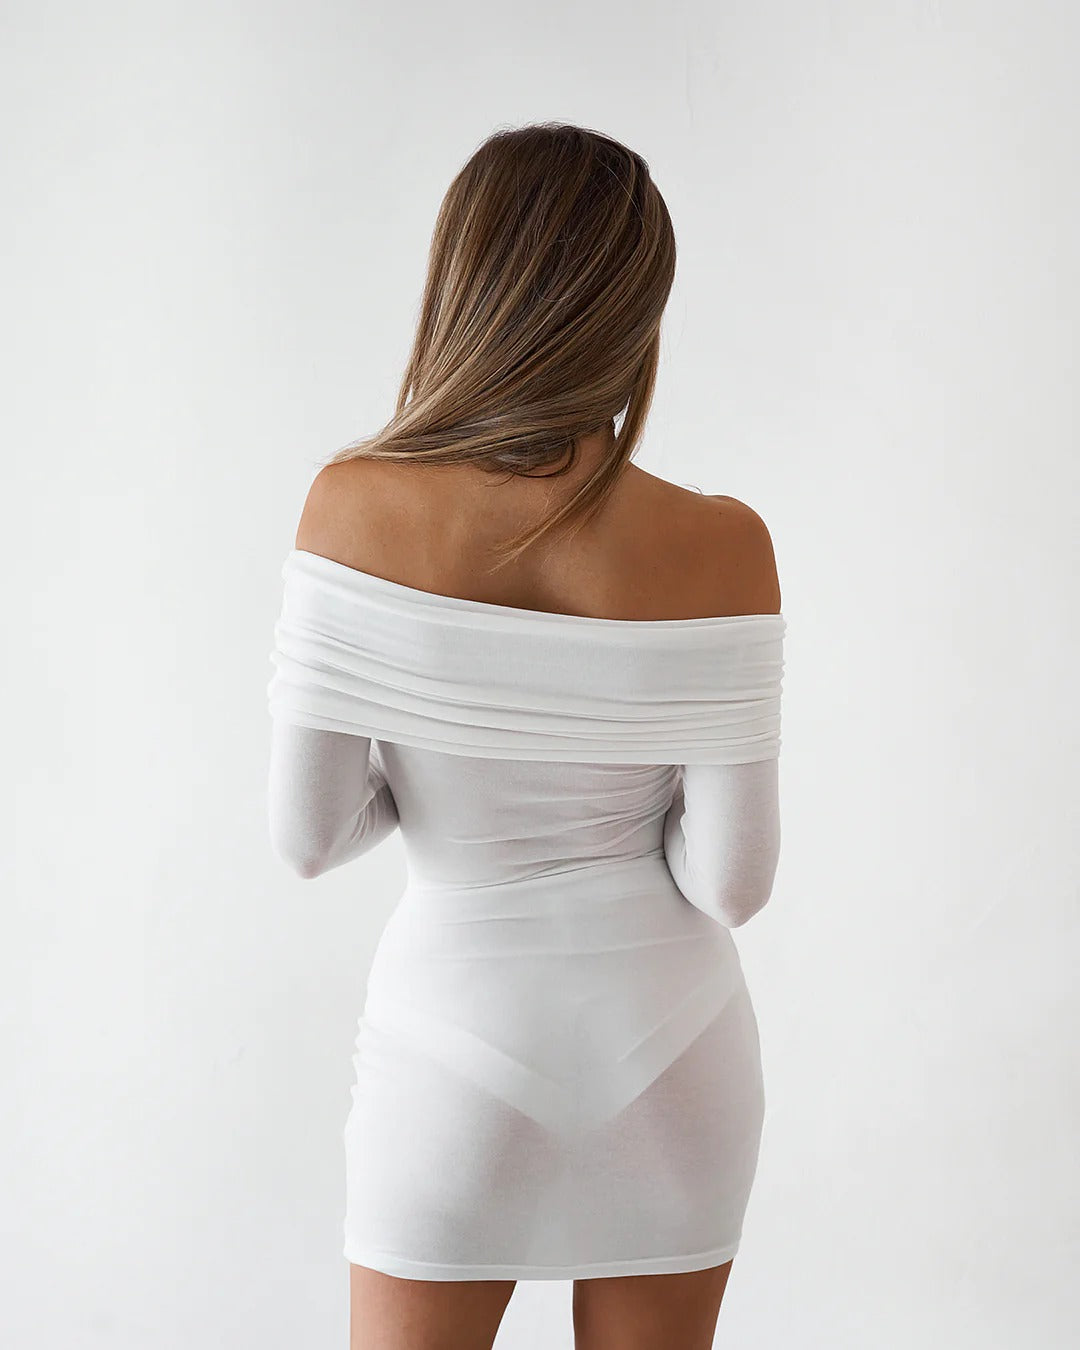 Sheer Mini Dress - White - SHOPJAUS - JAUS